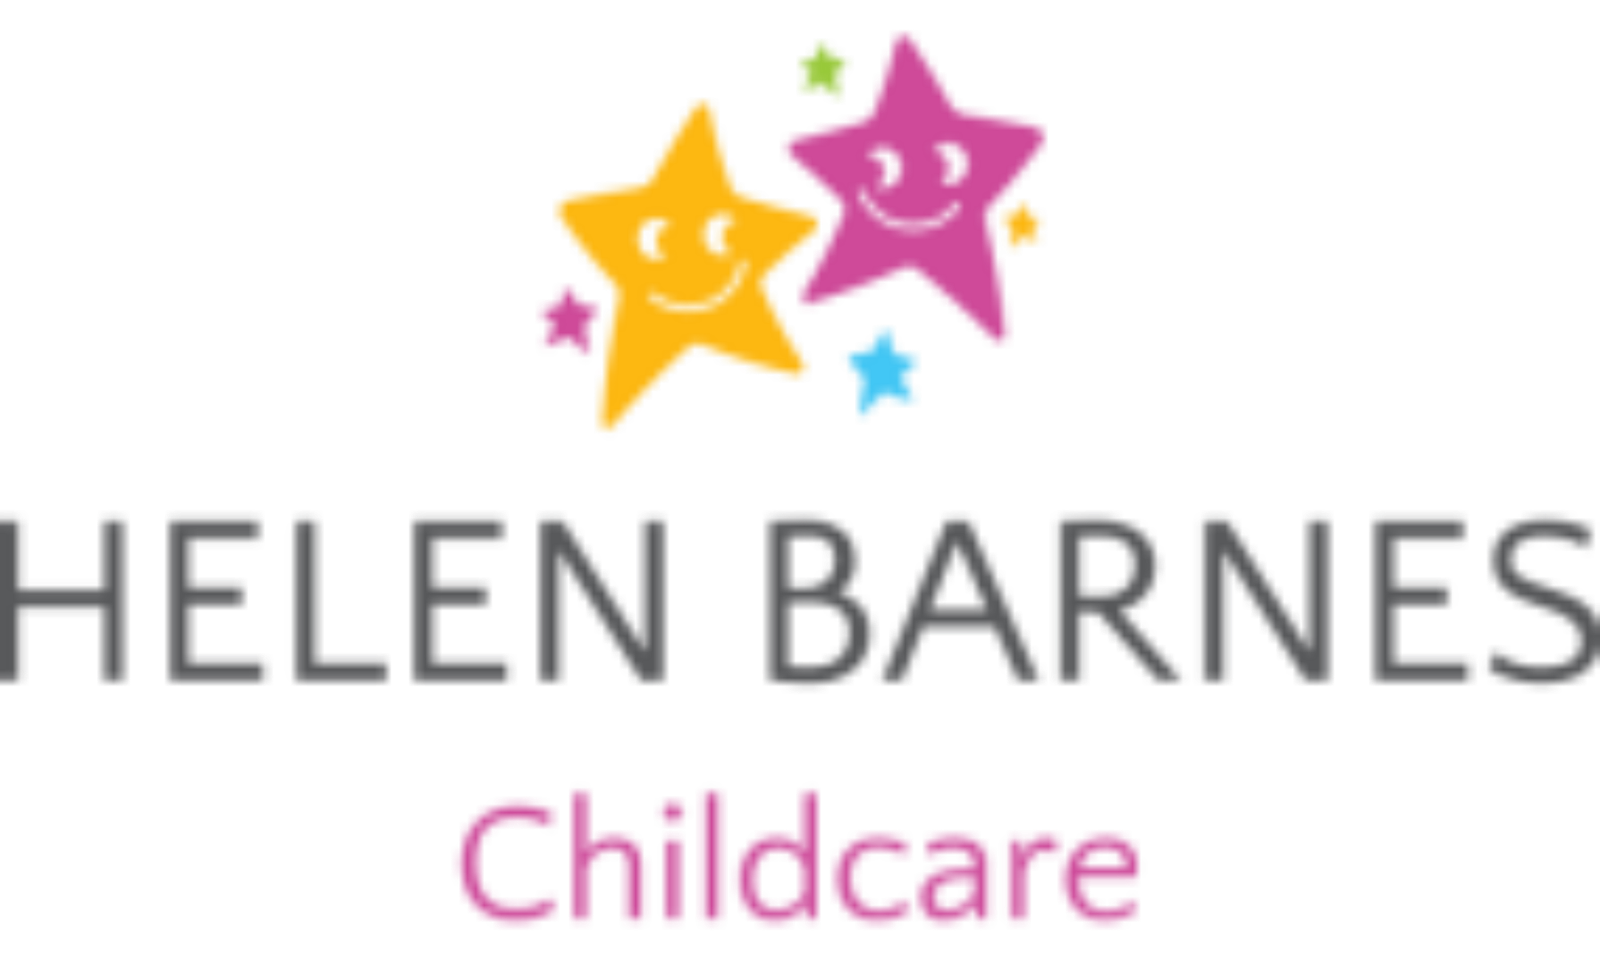 Helen Barnes Childcare, Nanny based in Altrincham, Cheshire